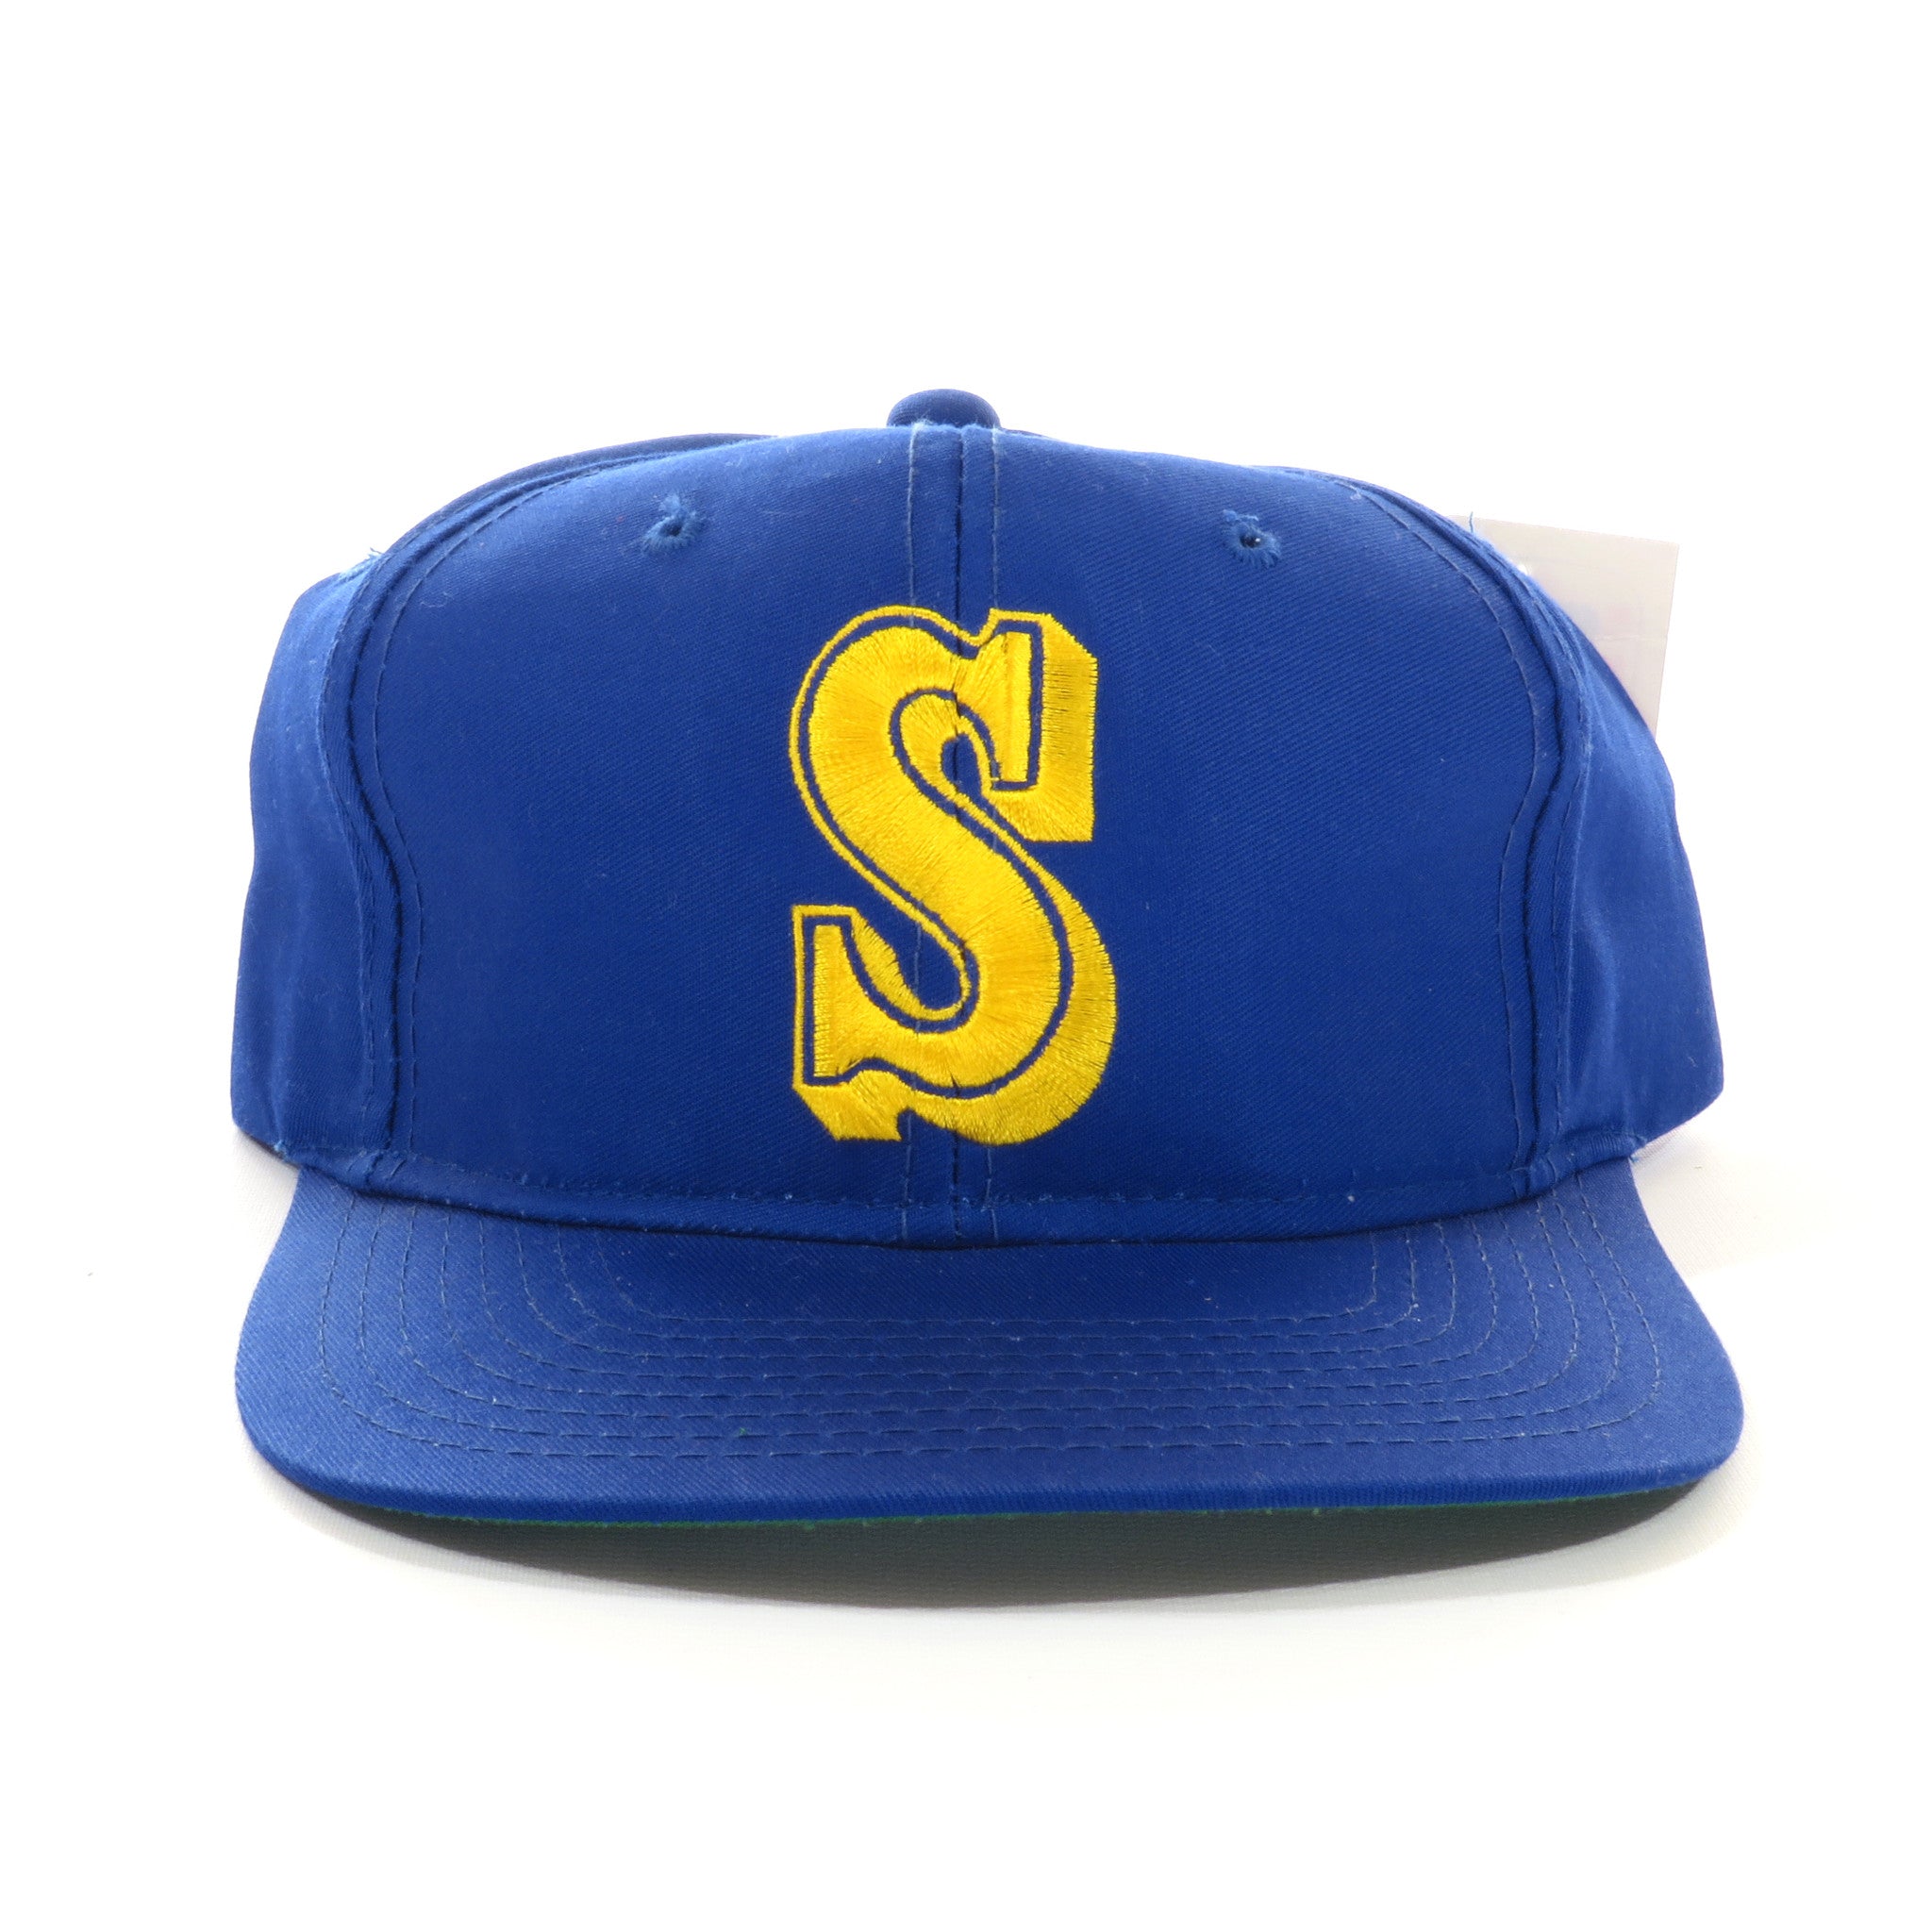 Seattle Mariners Snapback Hat